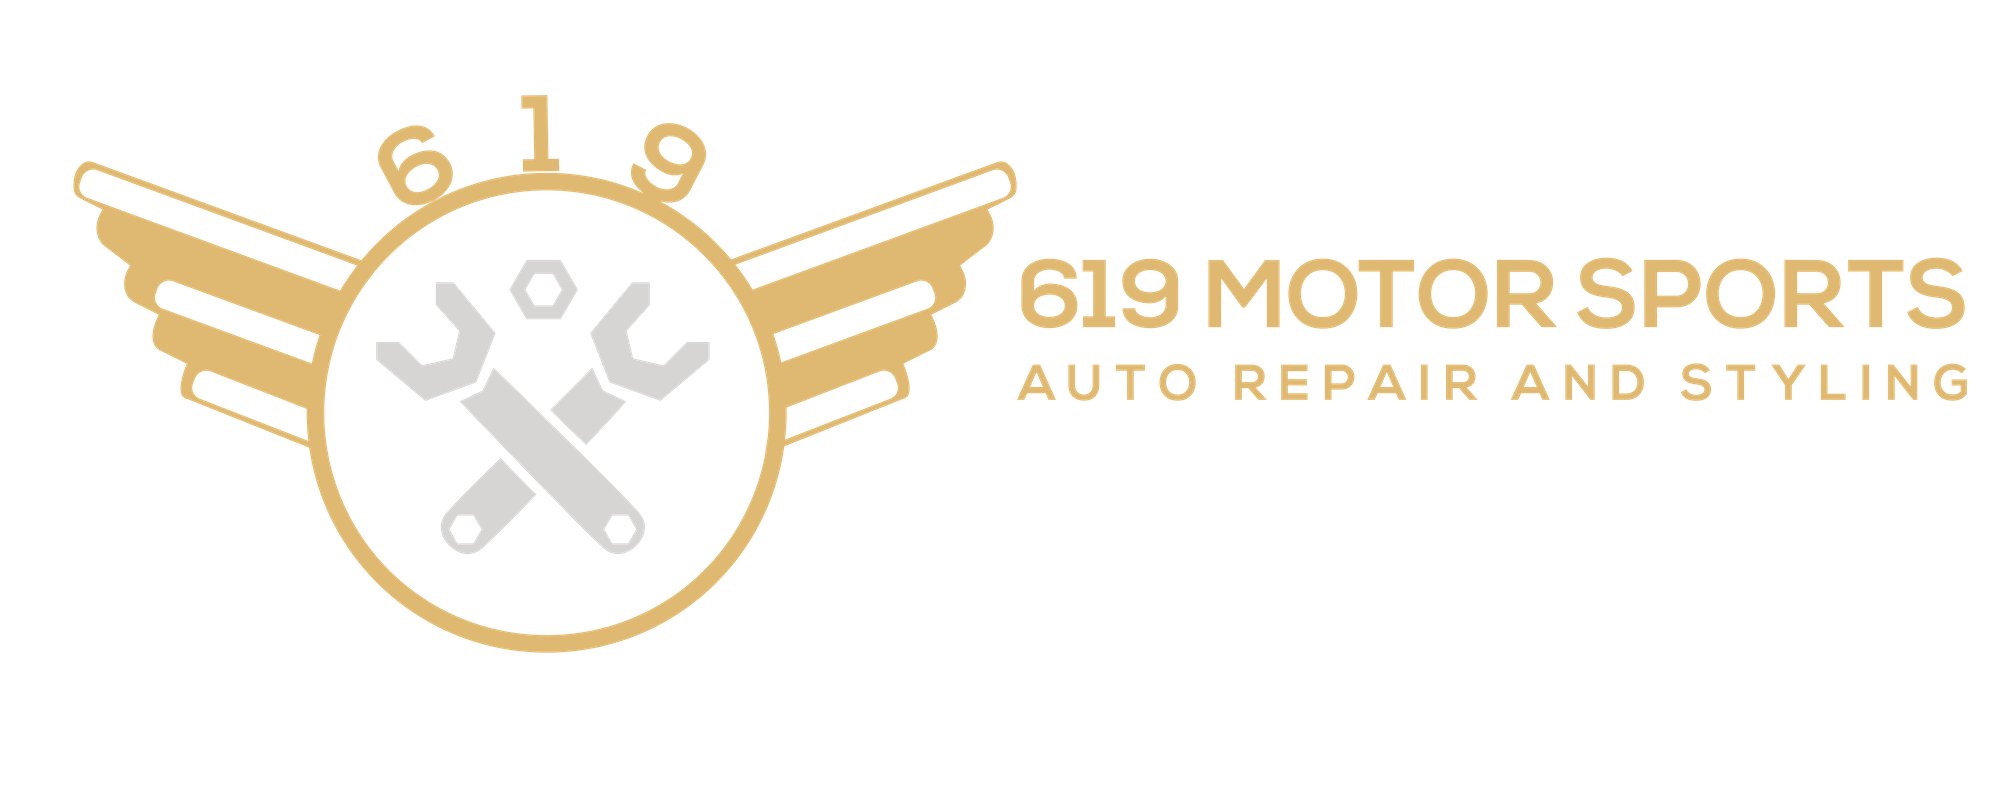 619 Motor Sports